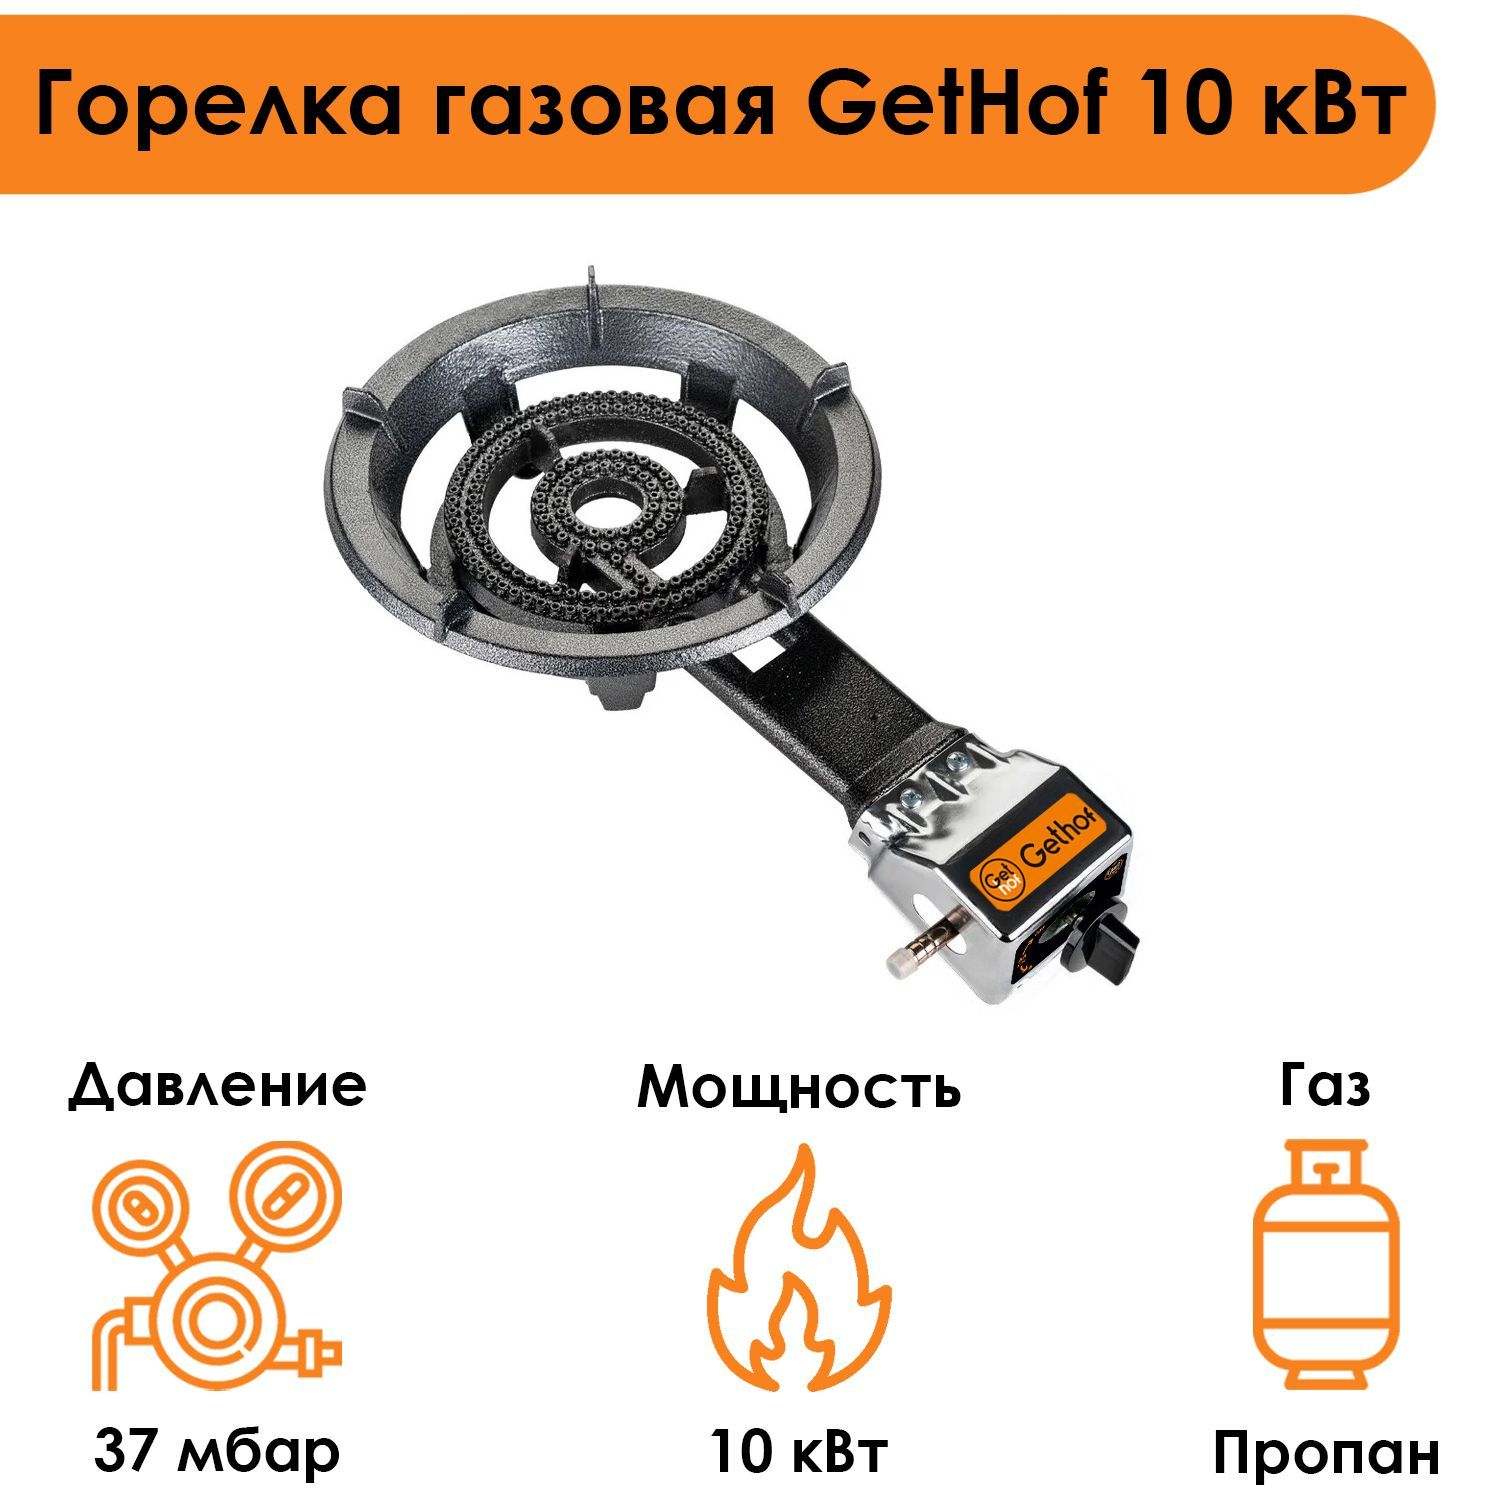 Горелка газовая GetHof 10 кВт GBS-10P (пропан)